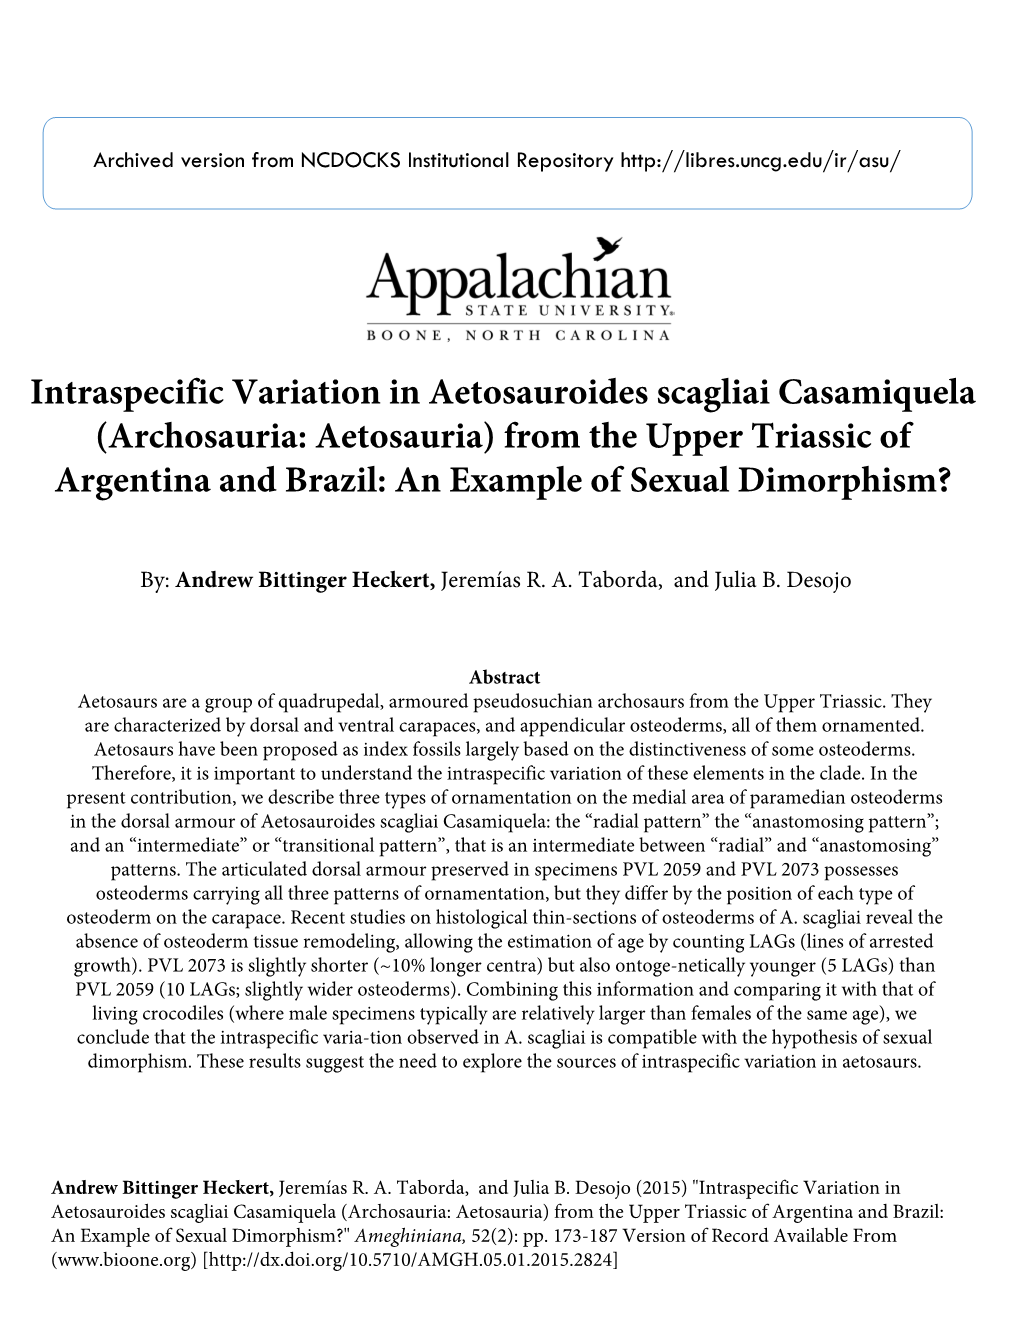 Intraspecific Variation in Aetosauroides Scagliai Casamiquela